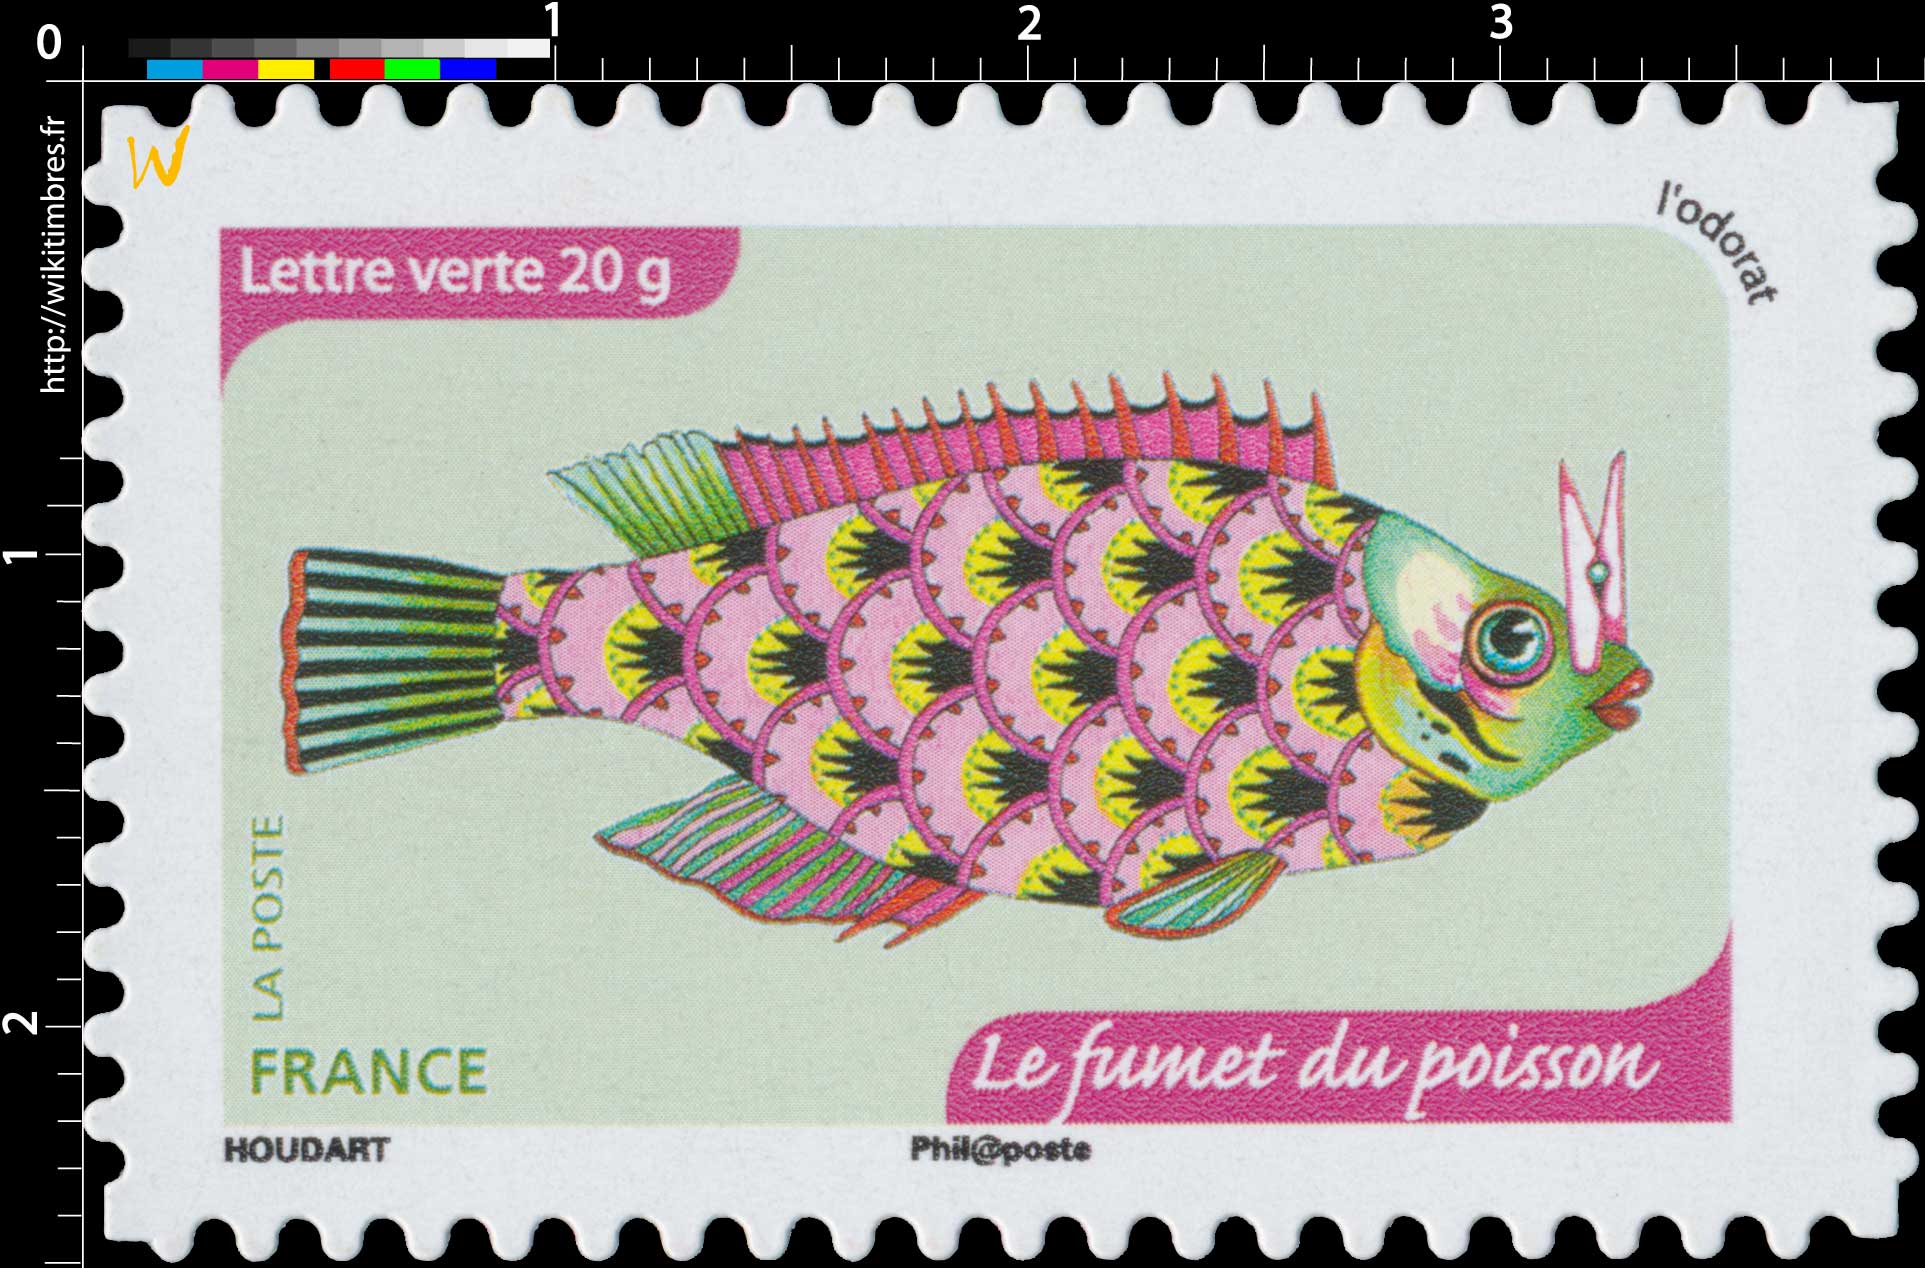 2014 L'odorat : Le fumet de poisson